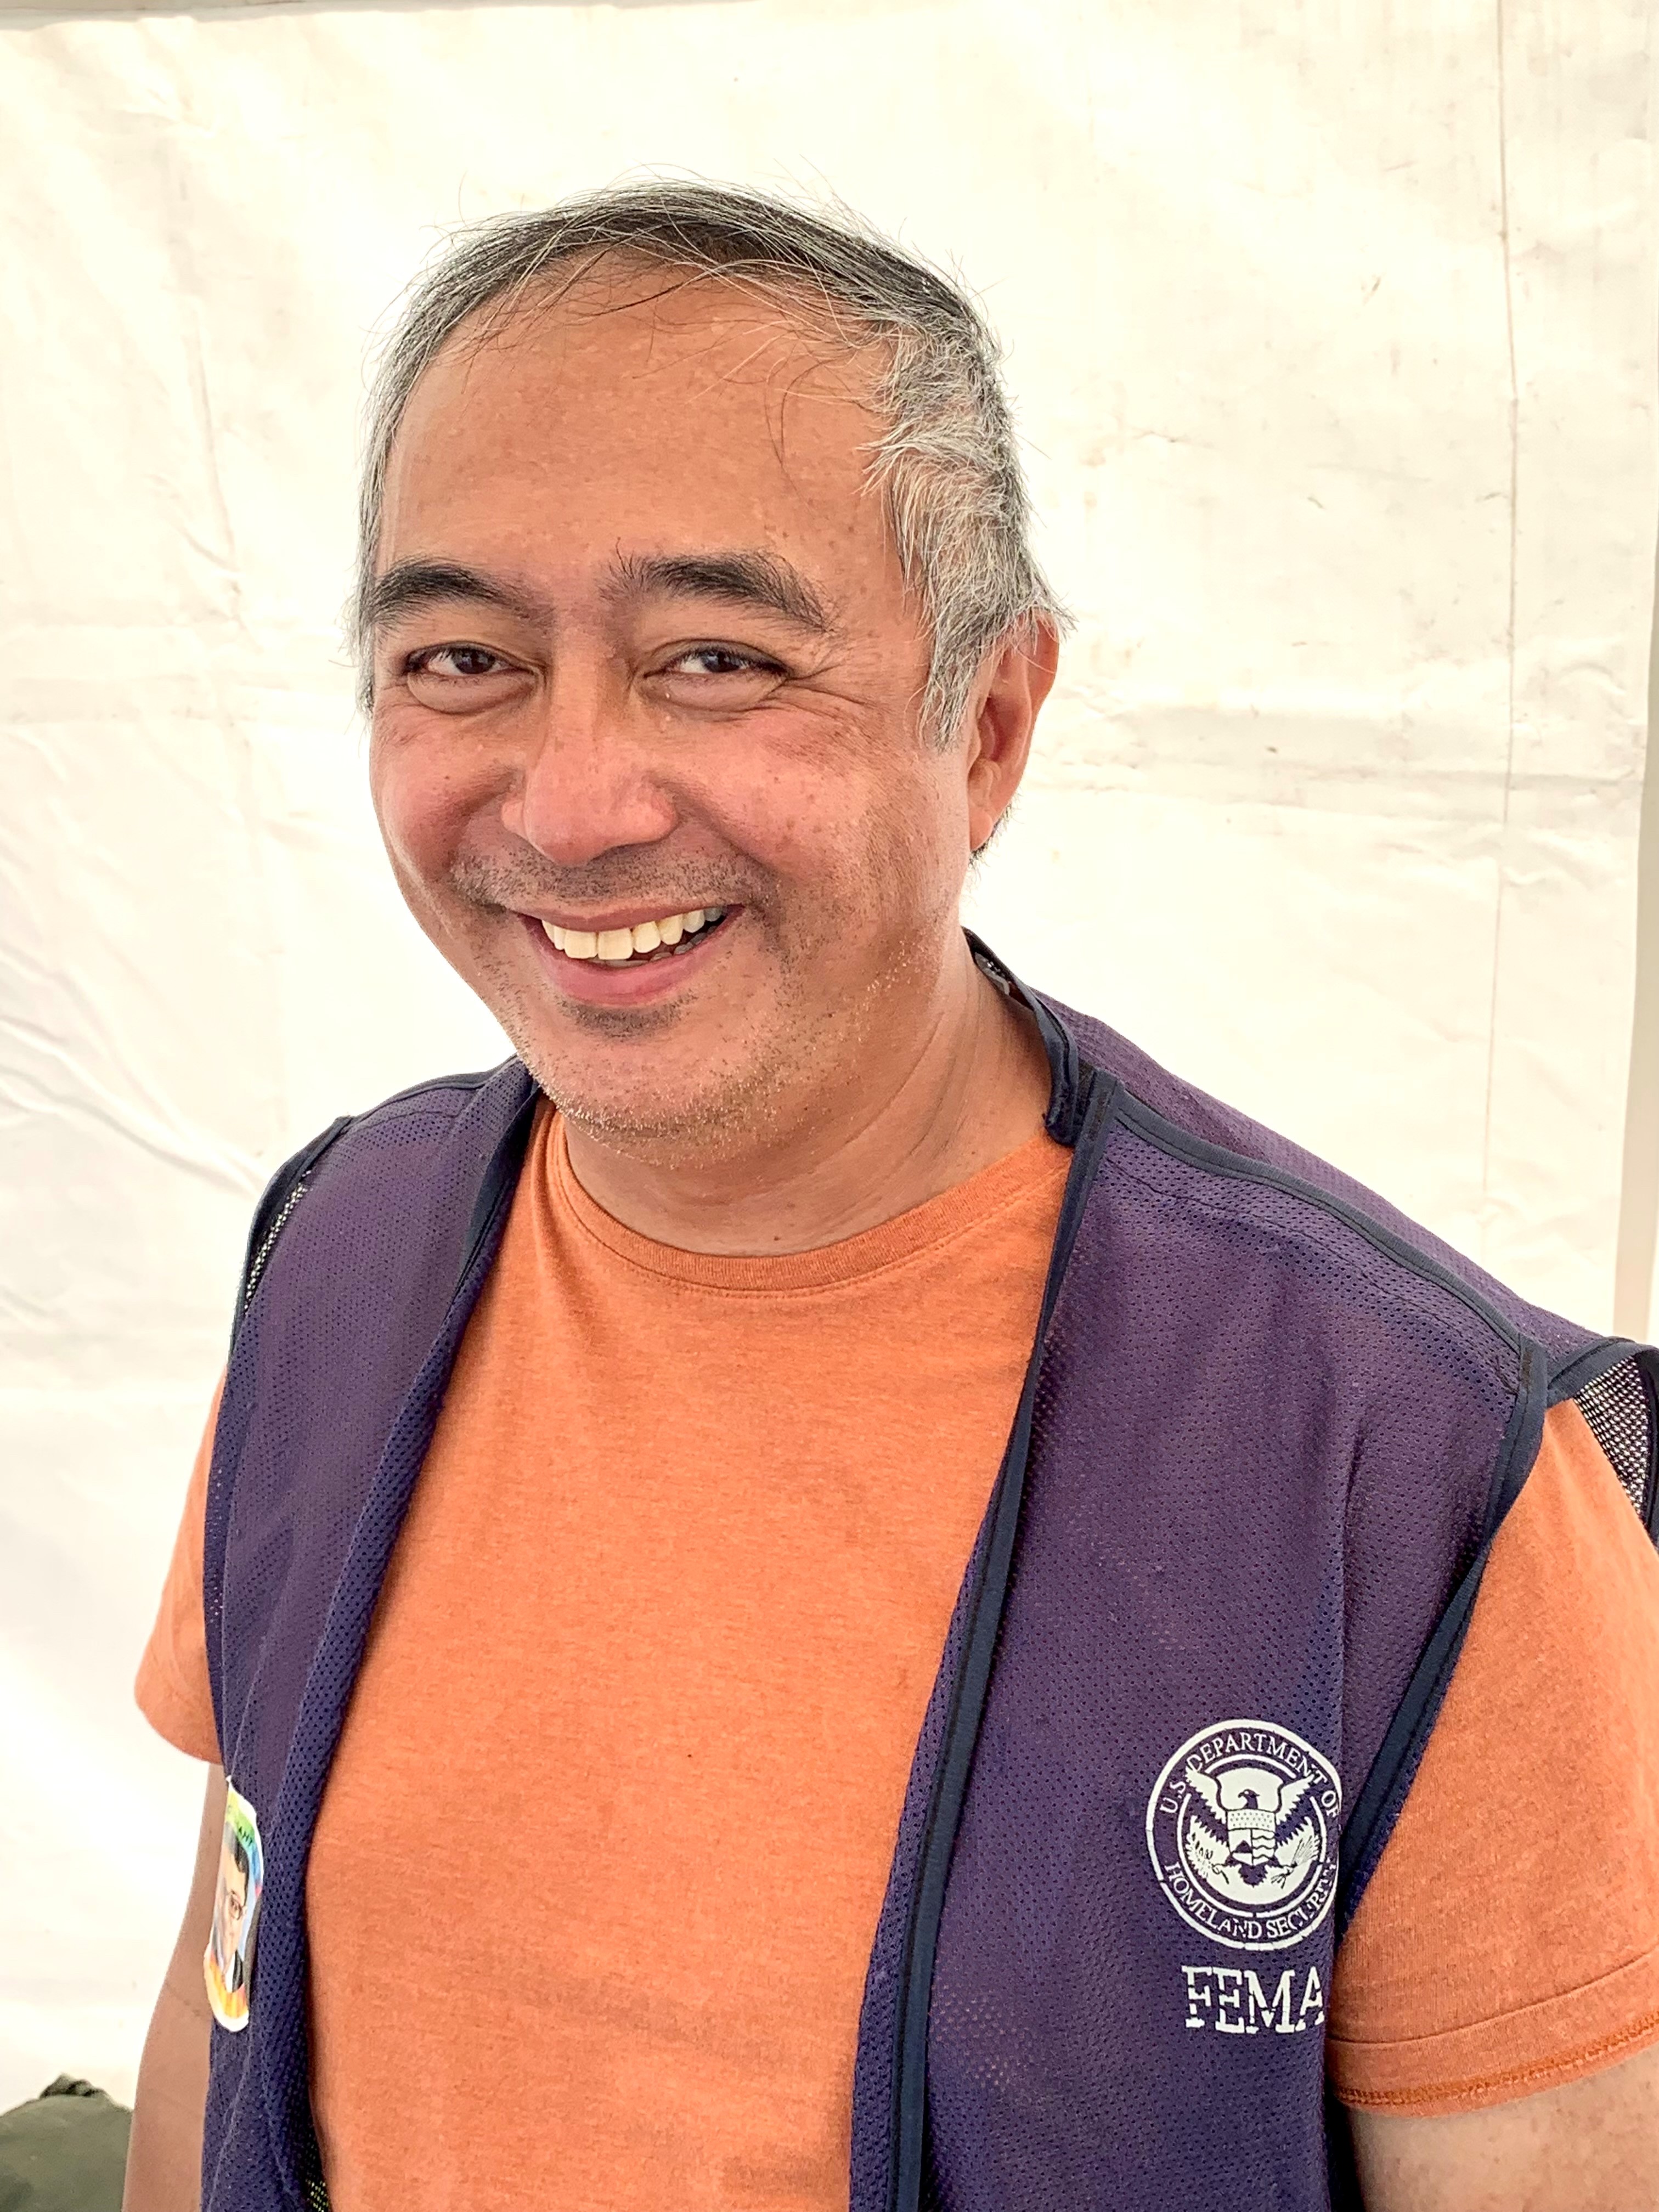 image of man wearing a fema vest, smilling